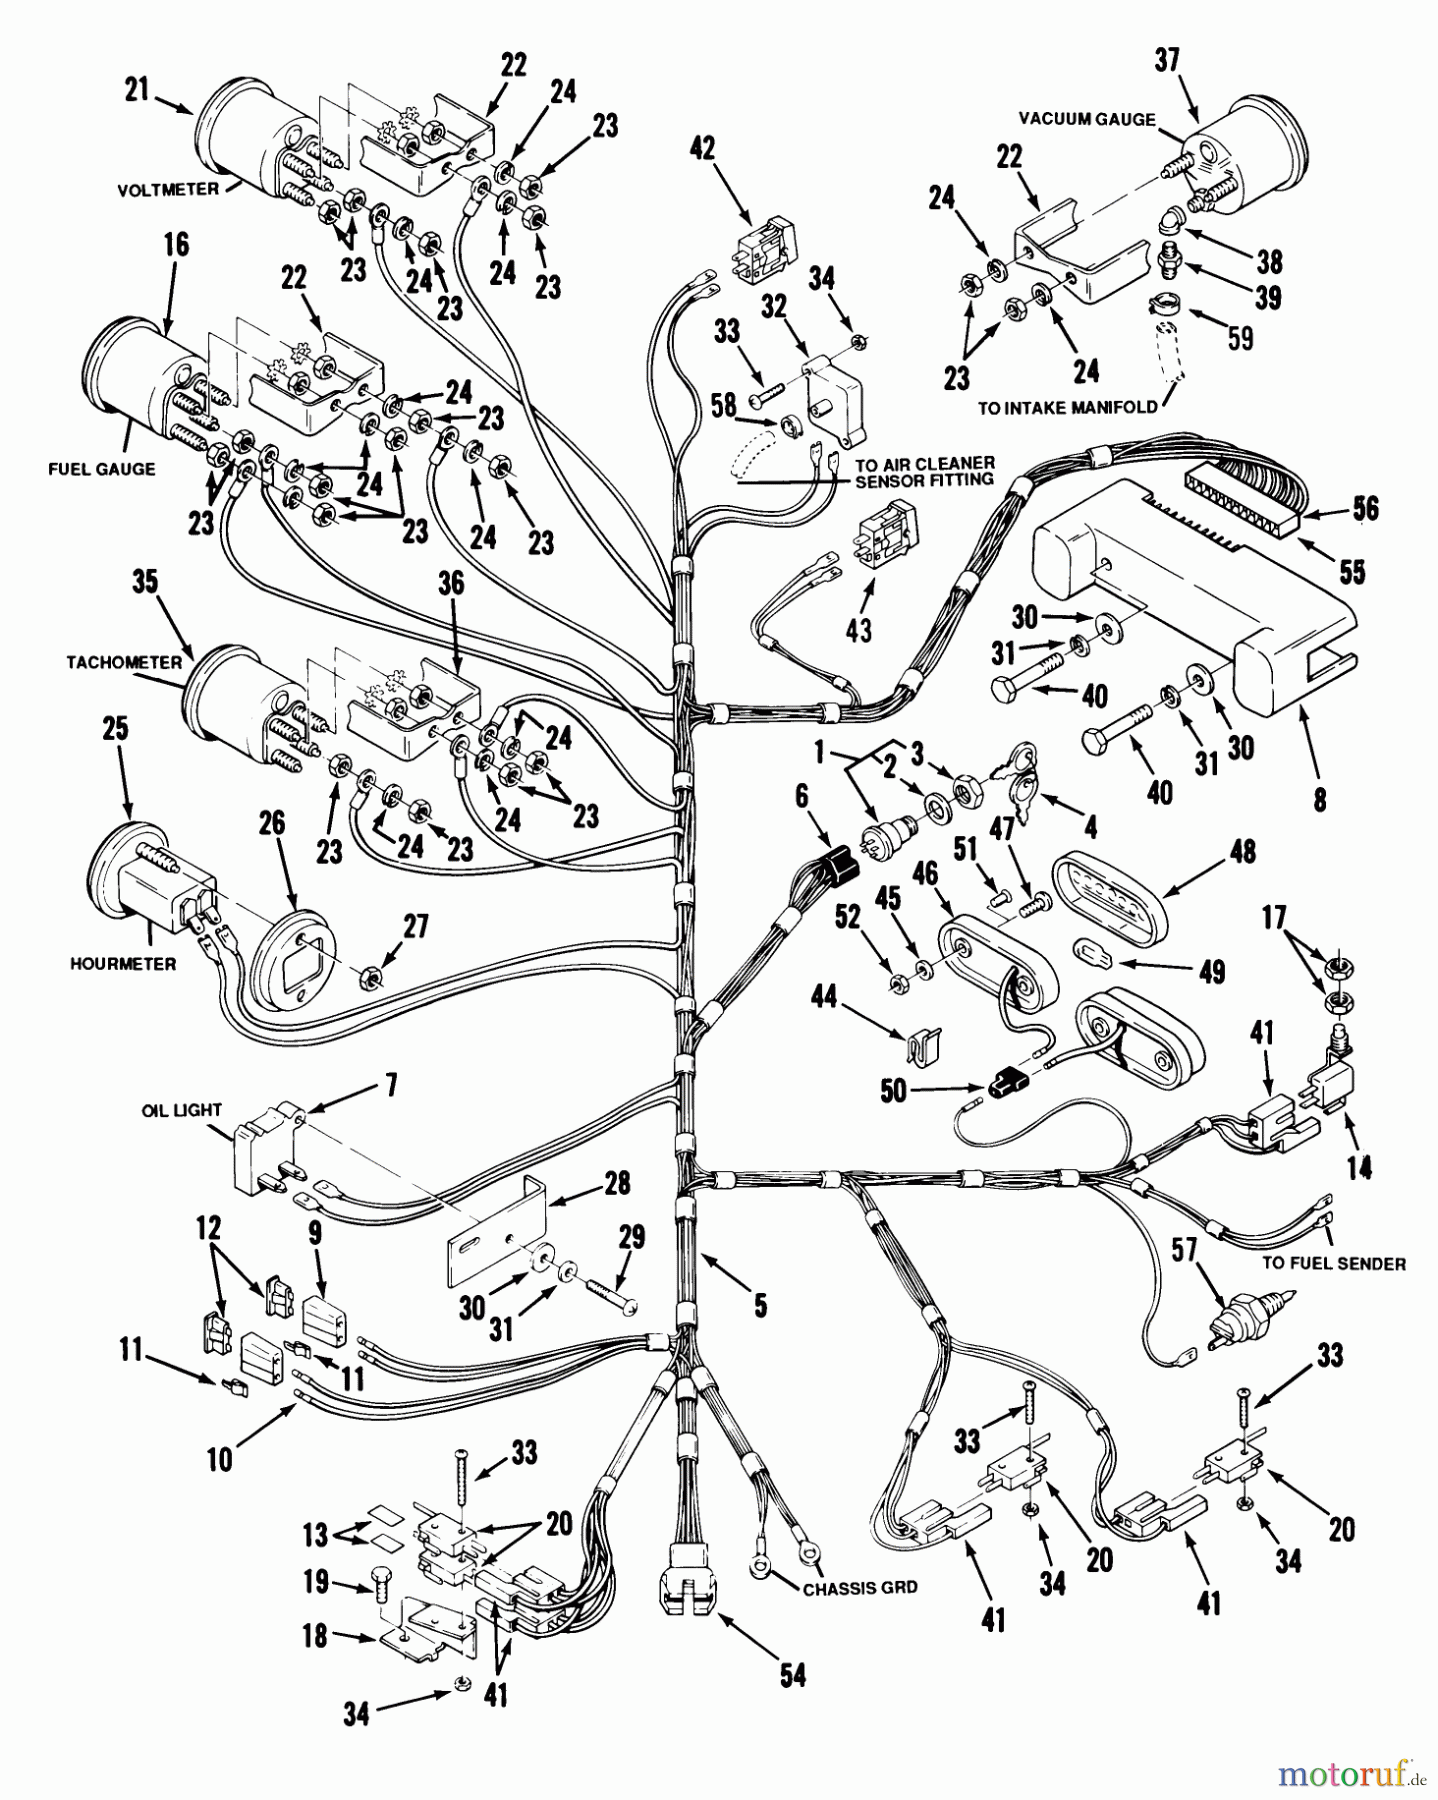  Toro Neu Mowers, Lawn & Garden Tractor Seite 1 31-18OE01 (518-H) - Toro 518-H Garden Tractor, 1988 ELECTRICAL SYSTEM #1